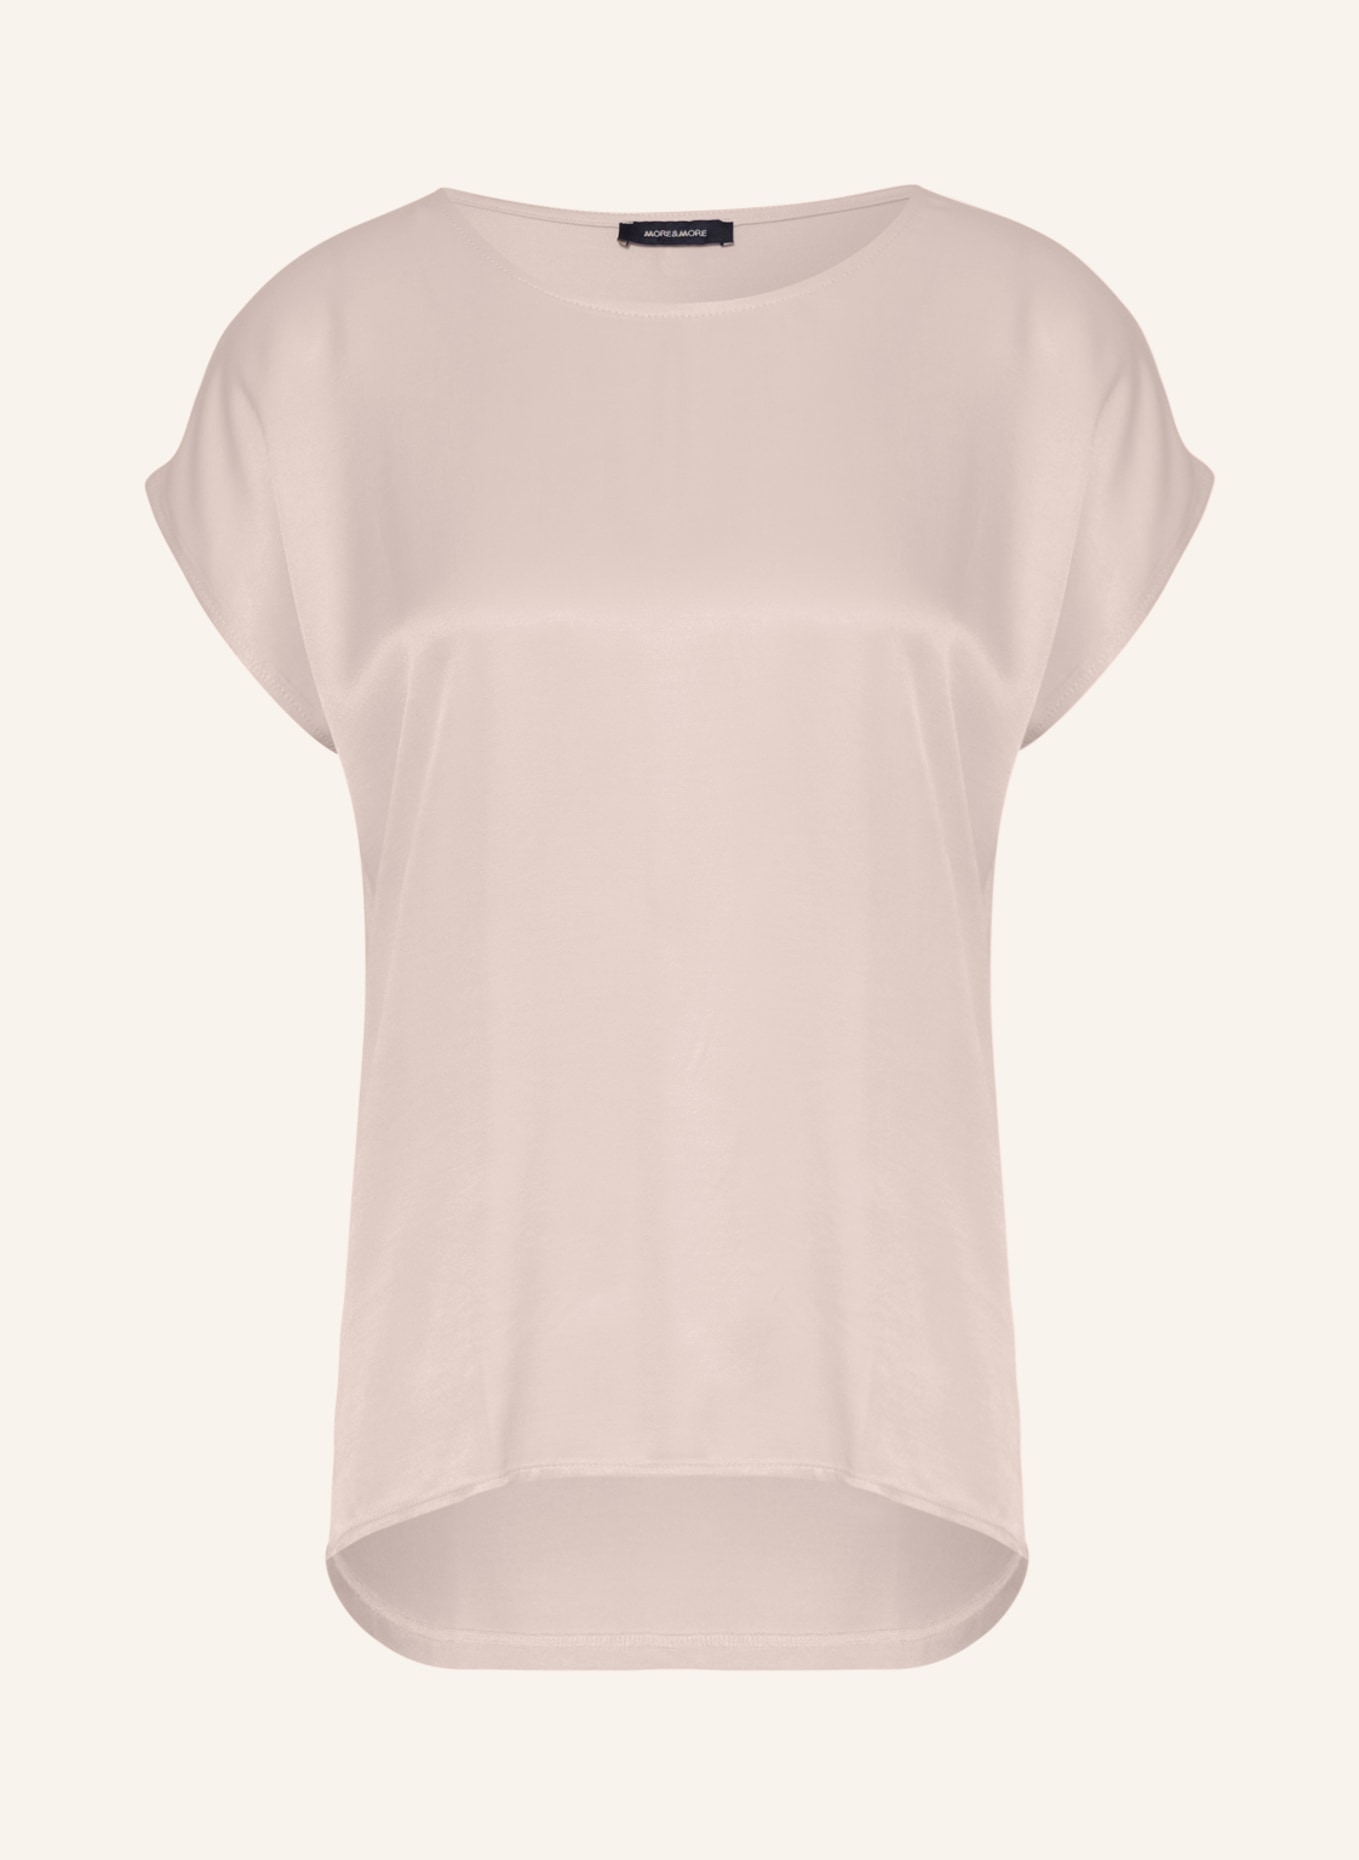 MORE & MORE Blusenshirt, Farbe: ROSÉ (Bild 1)